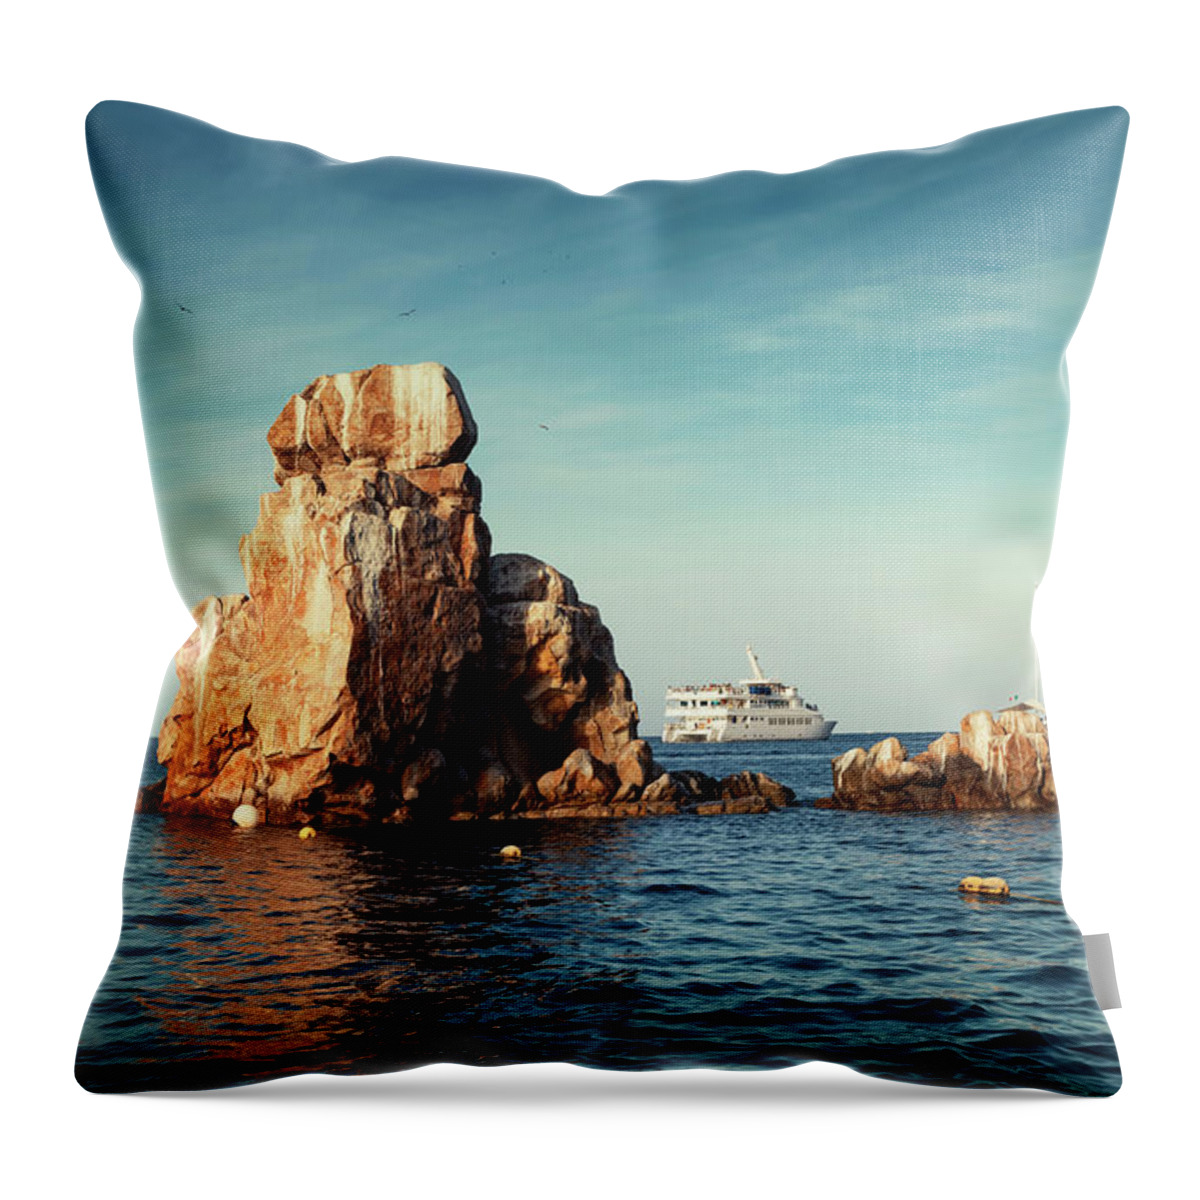 Estock Throw Pillow featuring the digital art Mexico, Baja California Sur, Cabo San Lucas, Pelican Rock by Claudia Uripos